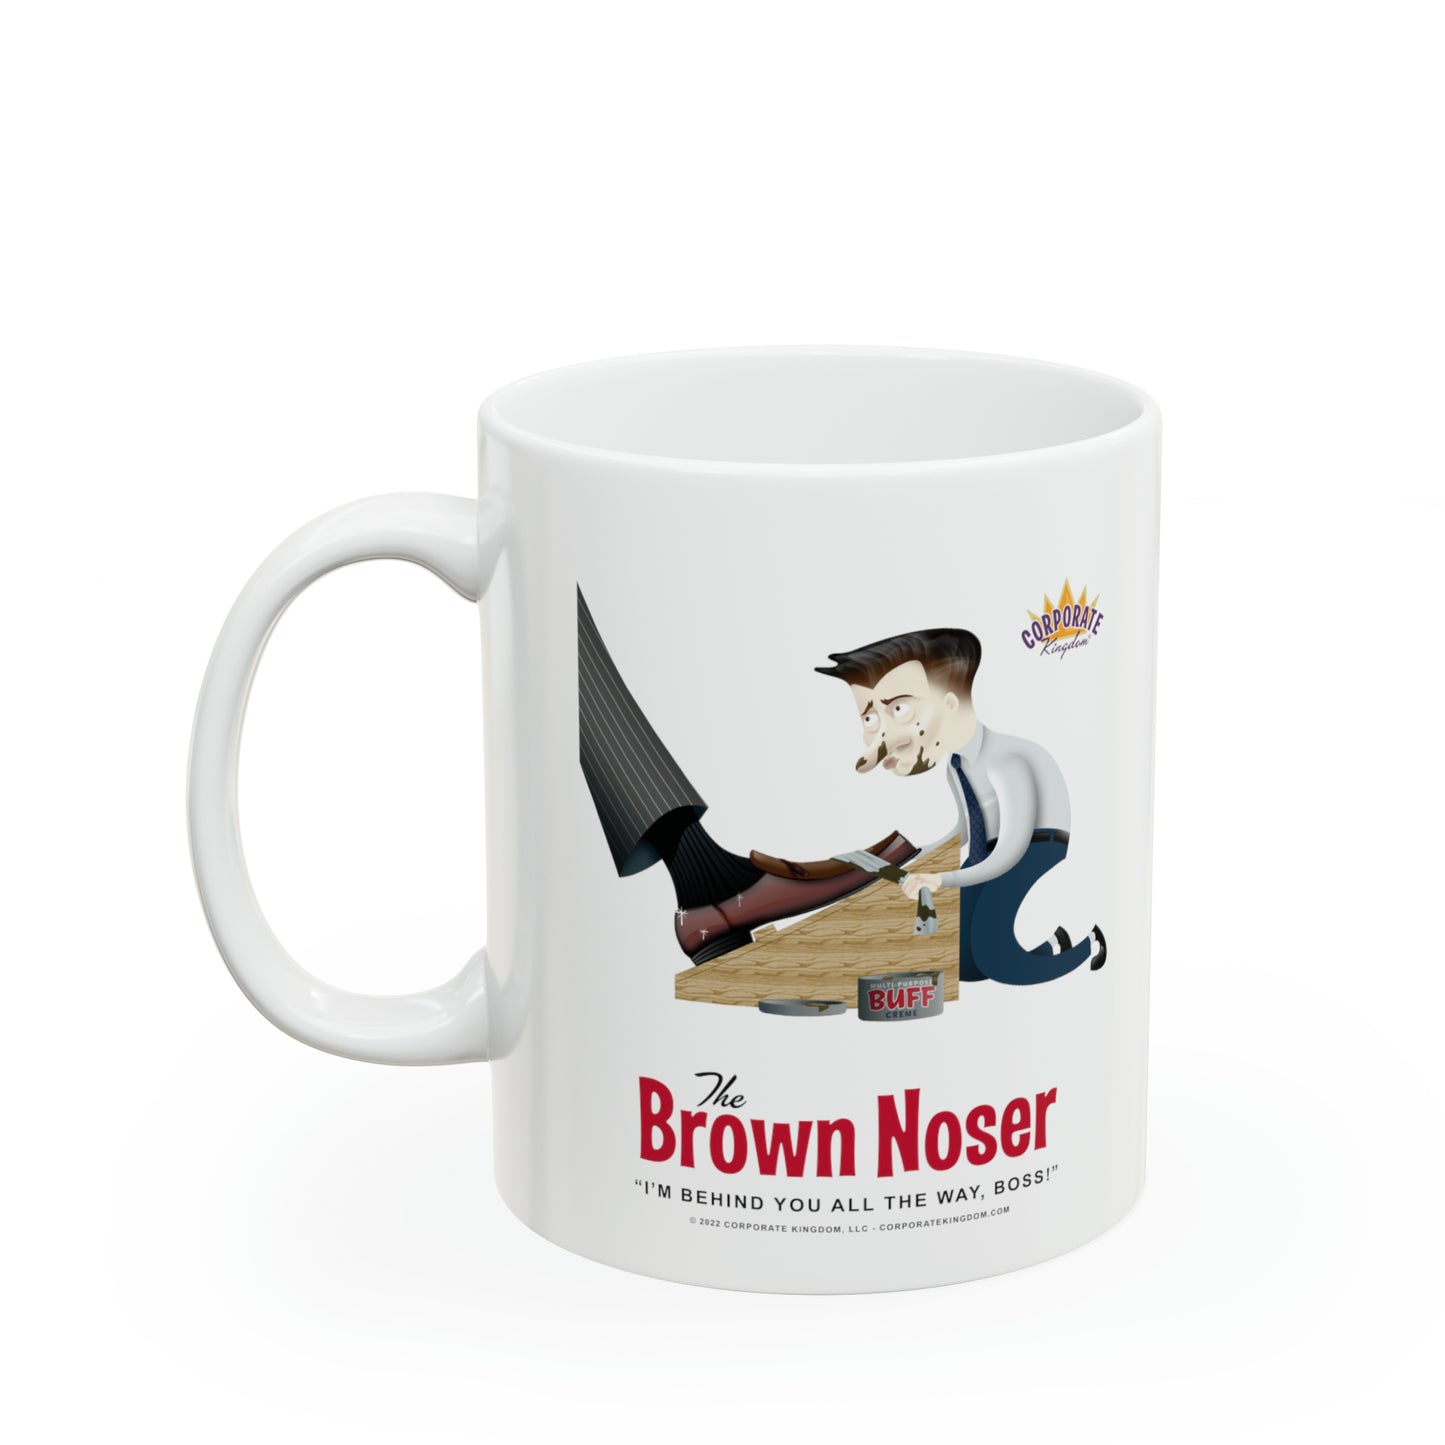 Brown Noser Coffee Mug by Corporate Kingdom®